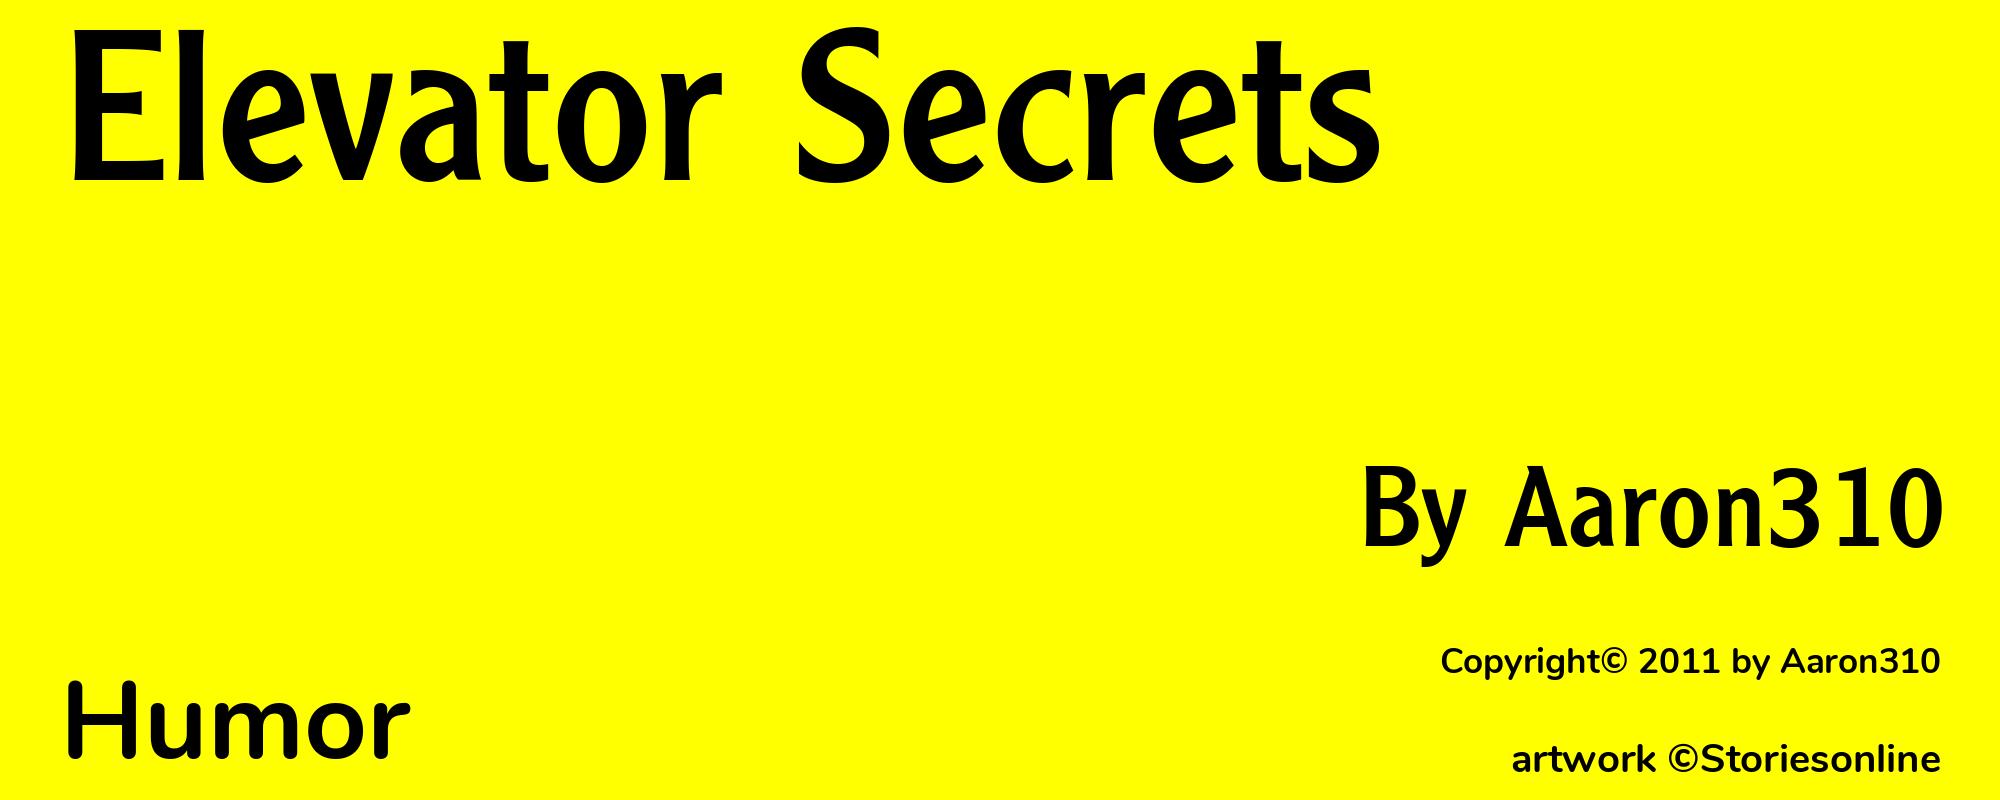 Elevator Secrets - Cover